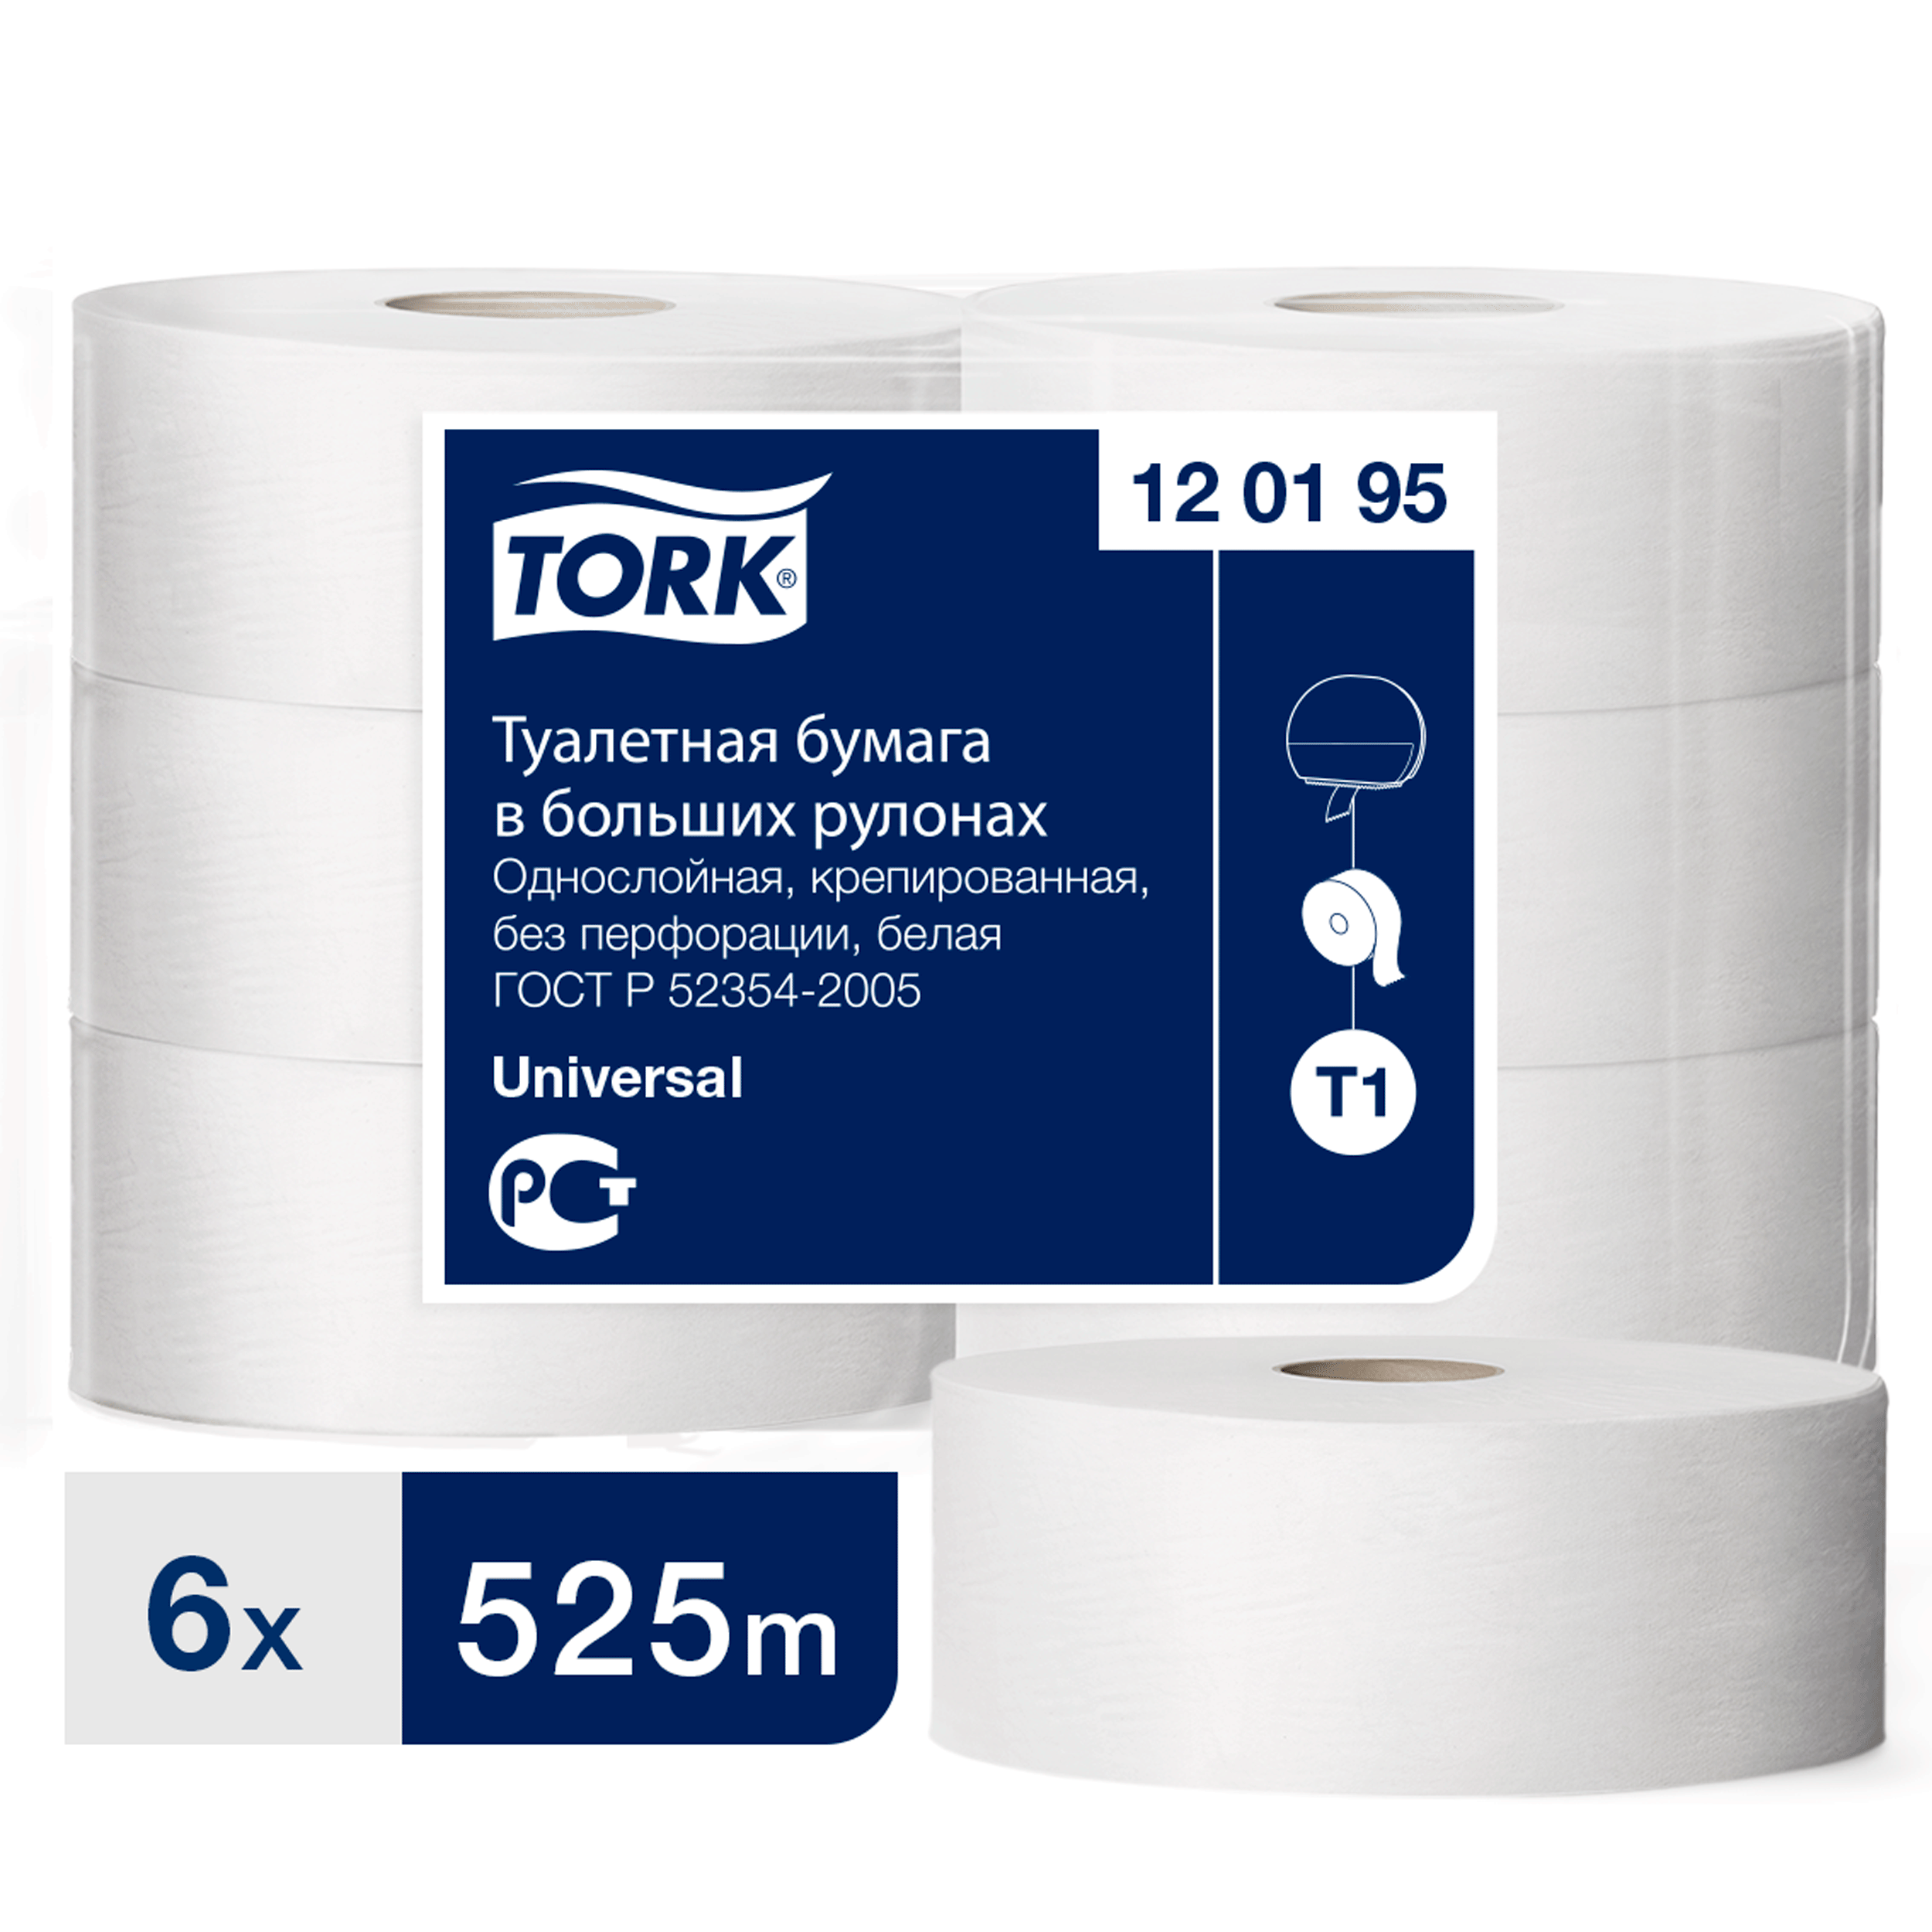 Туалетная бумага Tork в больших рулонах, T1, 1 слой, 525 м, ширина 9,5см, 6 шт туалетная бумага tork universal t1